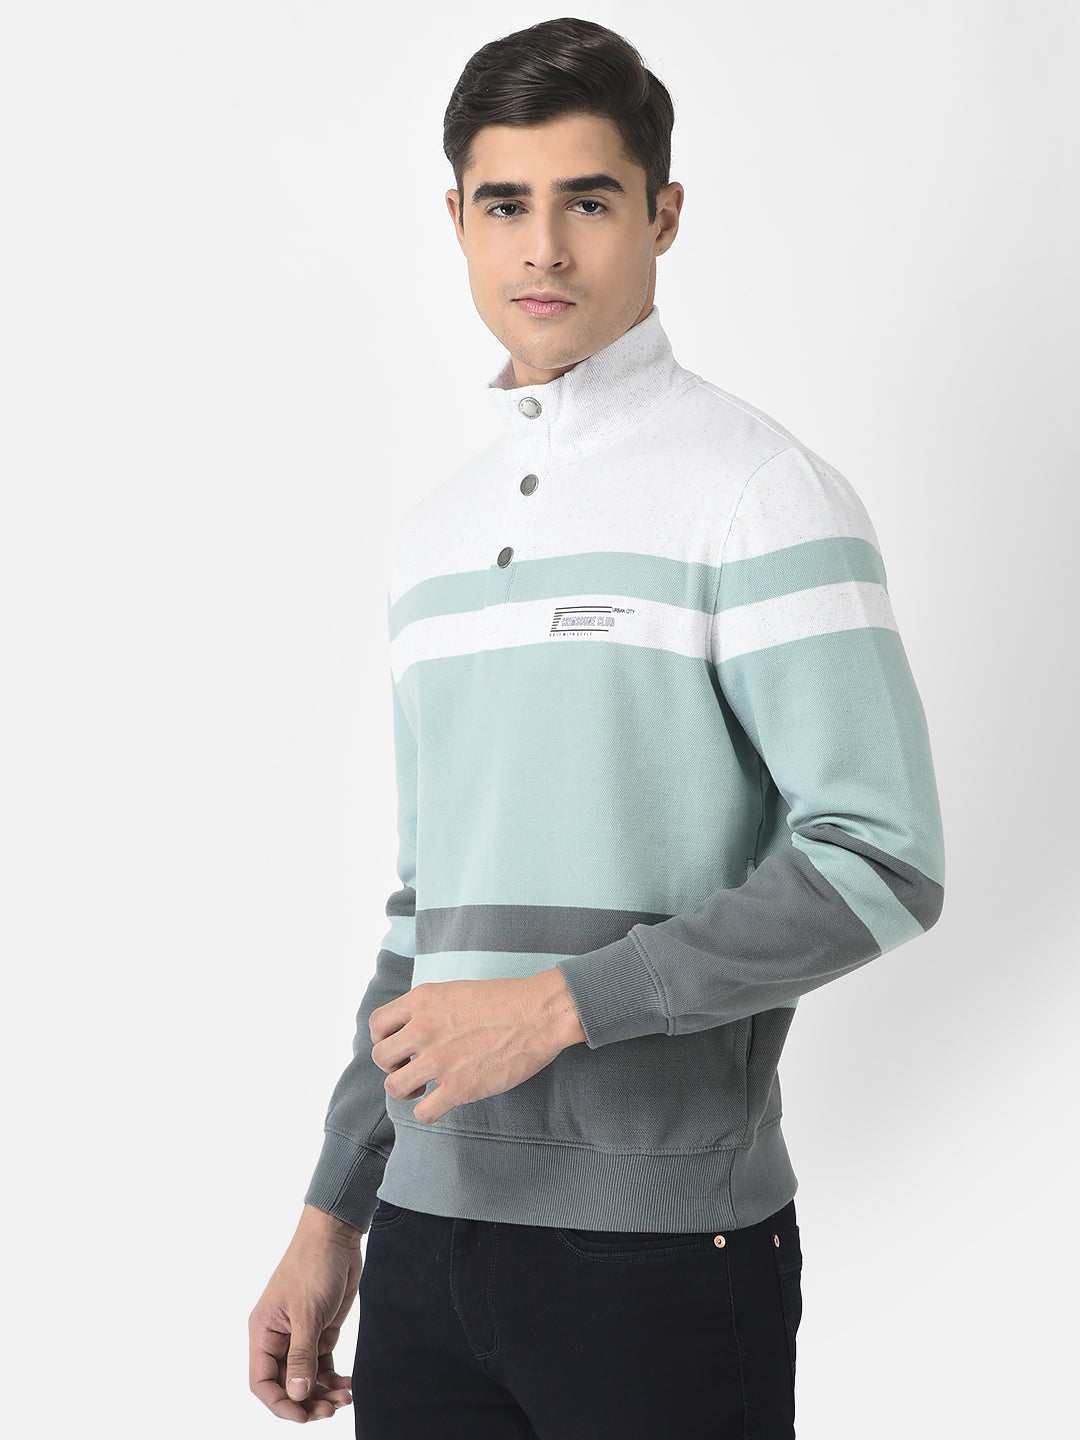  Multi-Colour Sweatshirt in Colour-Block Print 